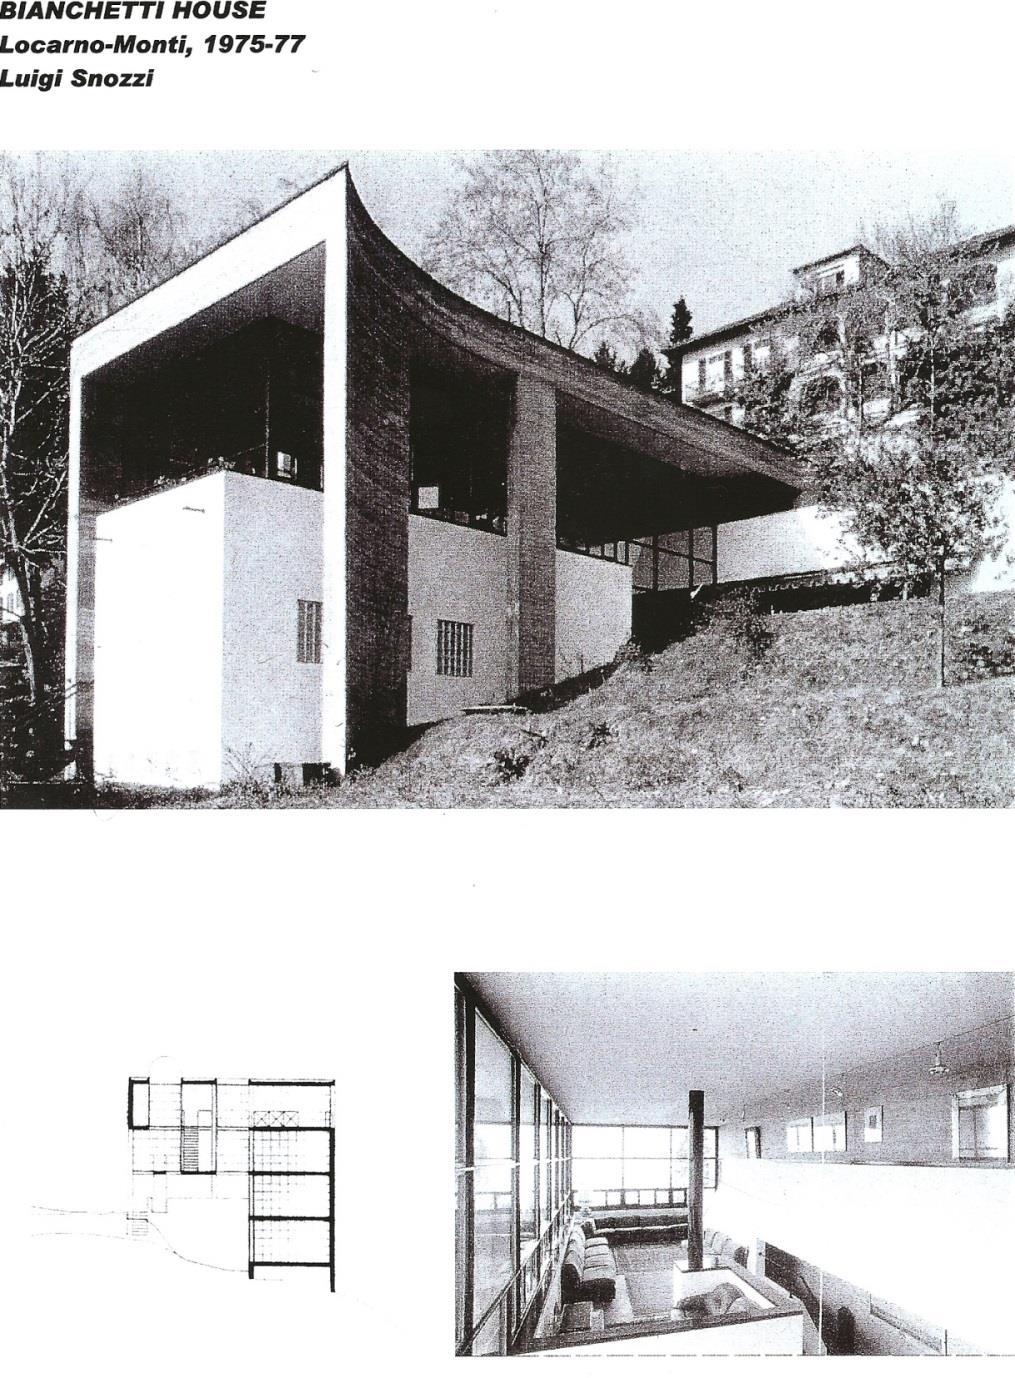 Luigi Snozzi, Banchetti House, Locarno 1975-77 Οι γυάλινες επιφάνειες στο ανώτερο τμήμα